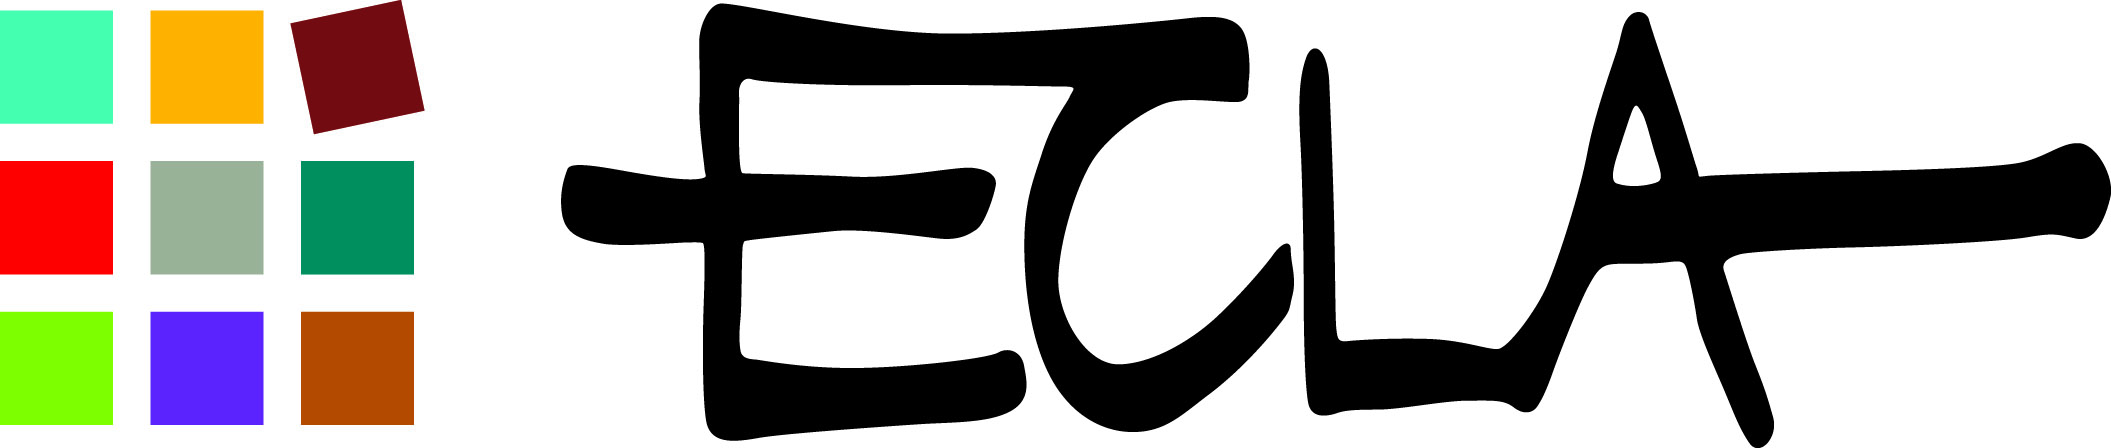 ecla-logo 2008 couleur_0.jpg 